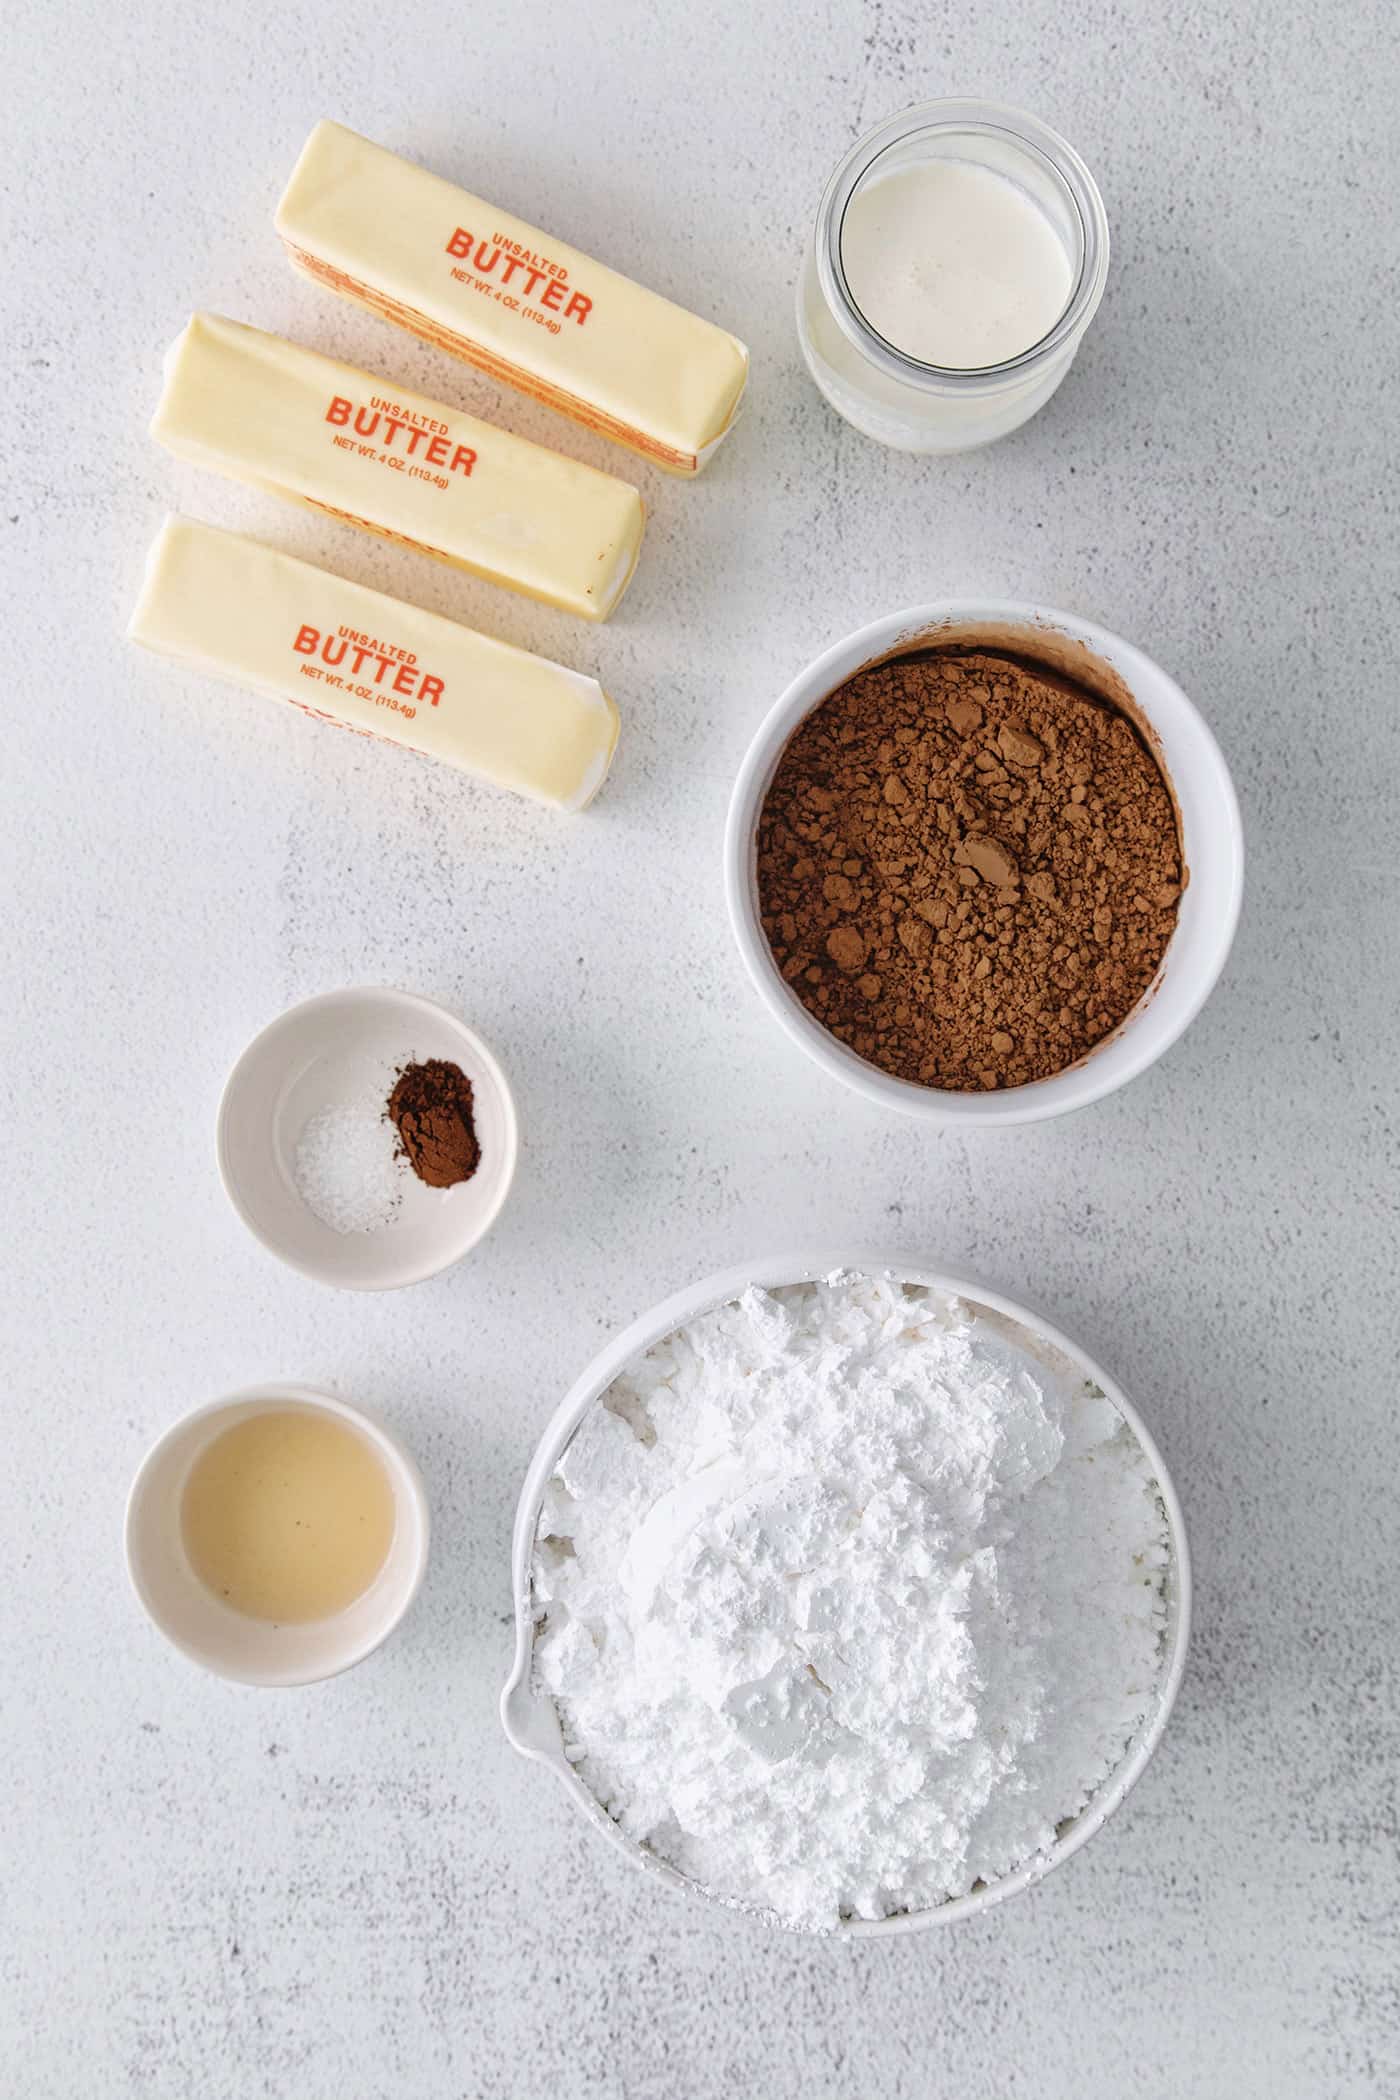 Chocolate buttercream ingredients